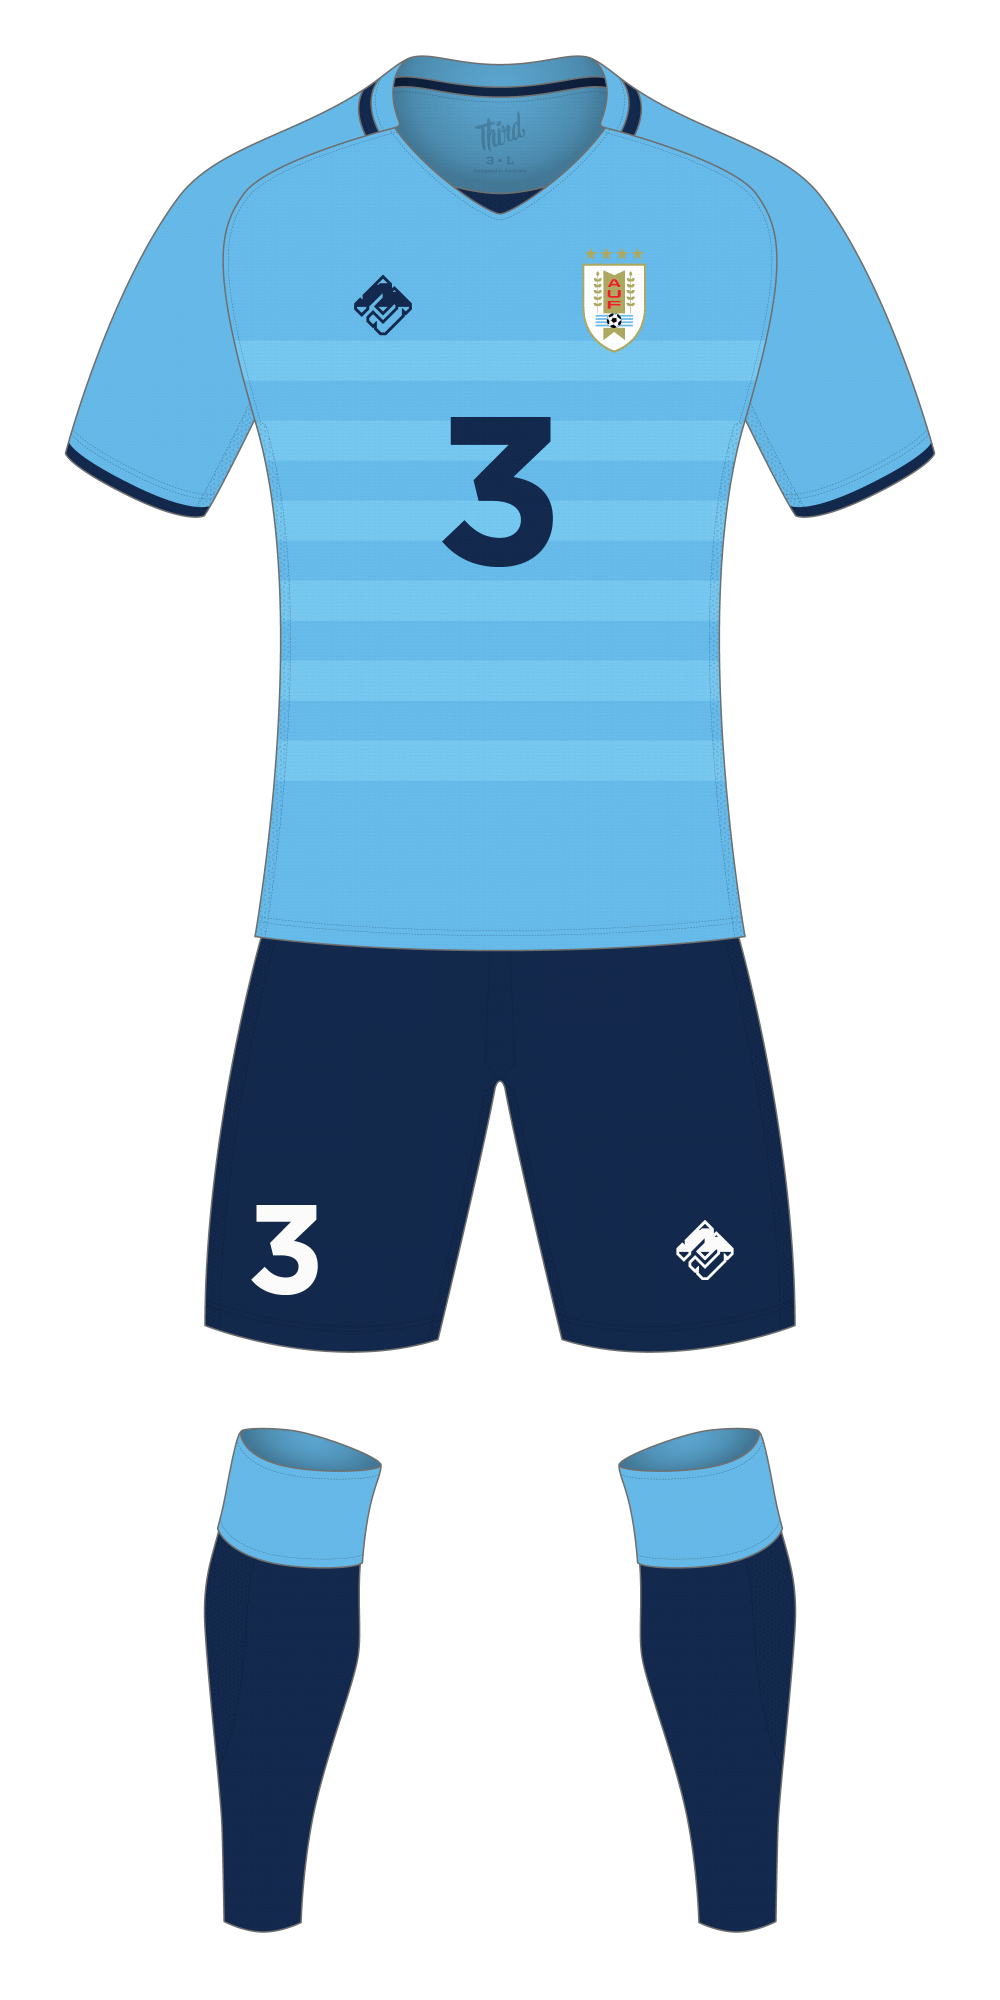 Uruguay World Cup 2018 concept